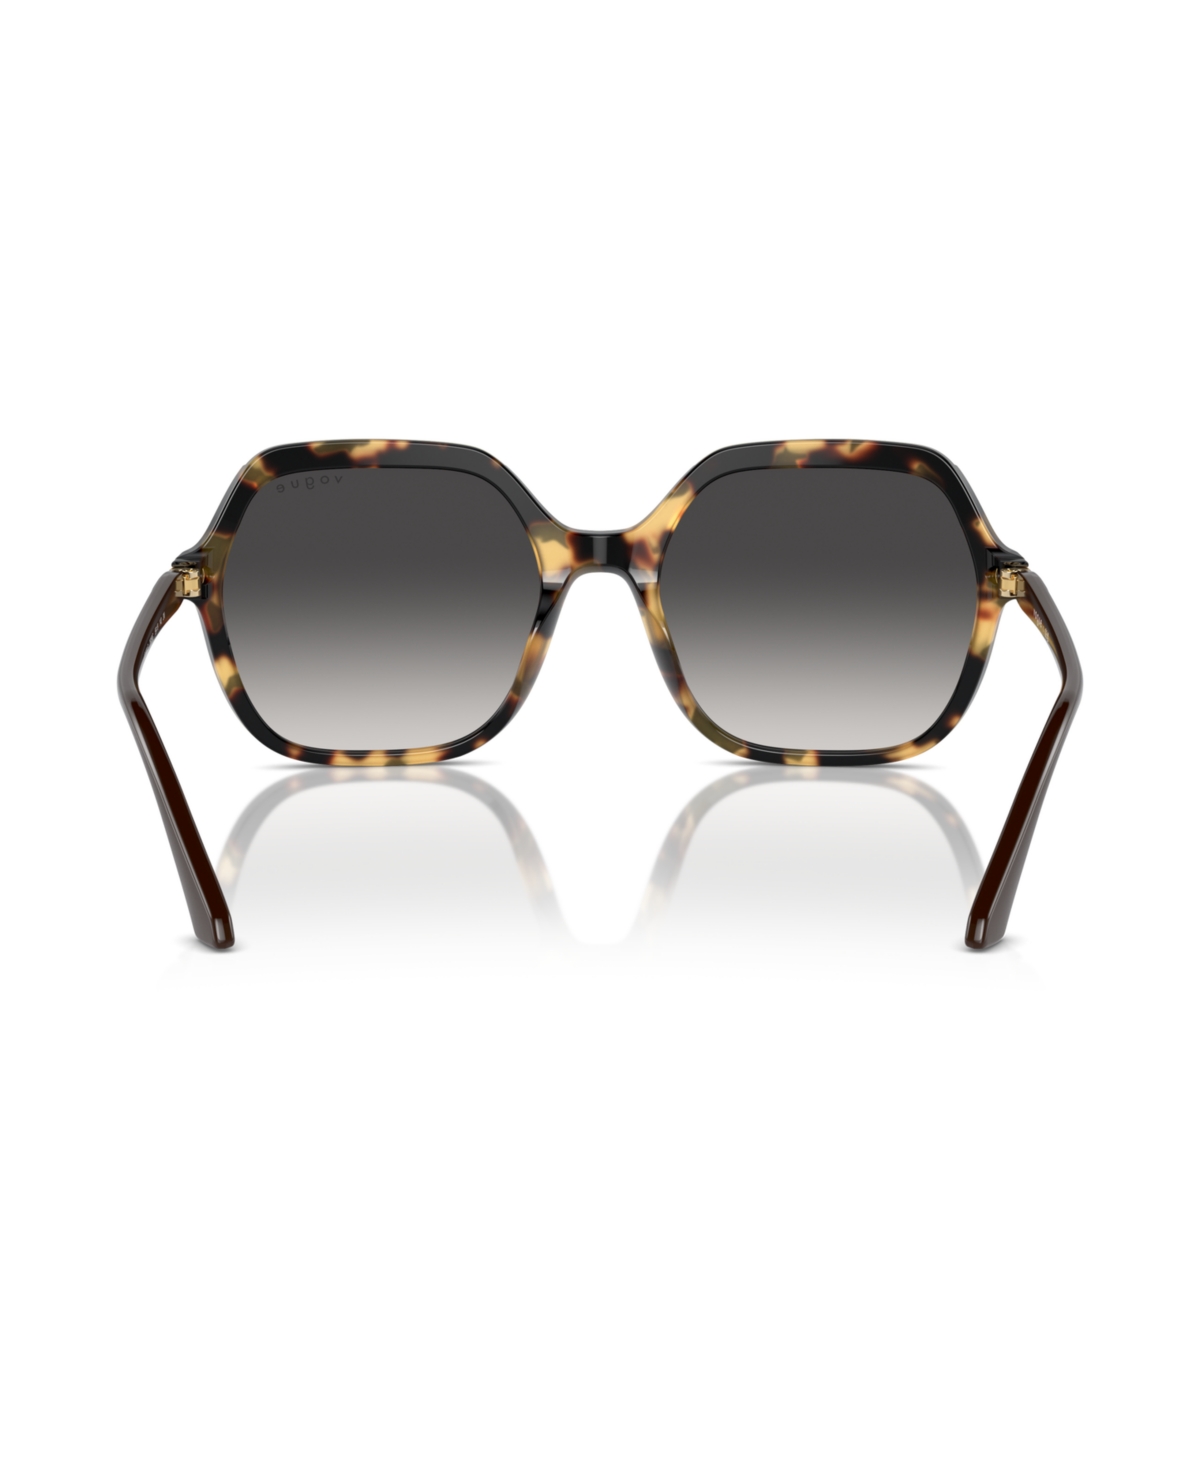 Shop Vogue Women's Sunglasses, Vo5561s In Yellow Tortoise